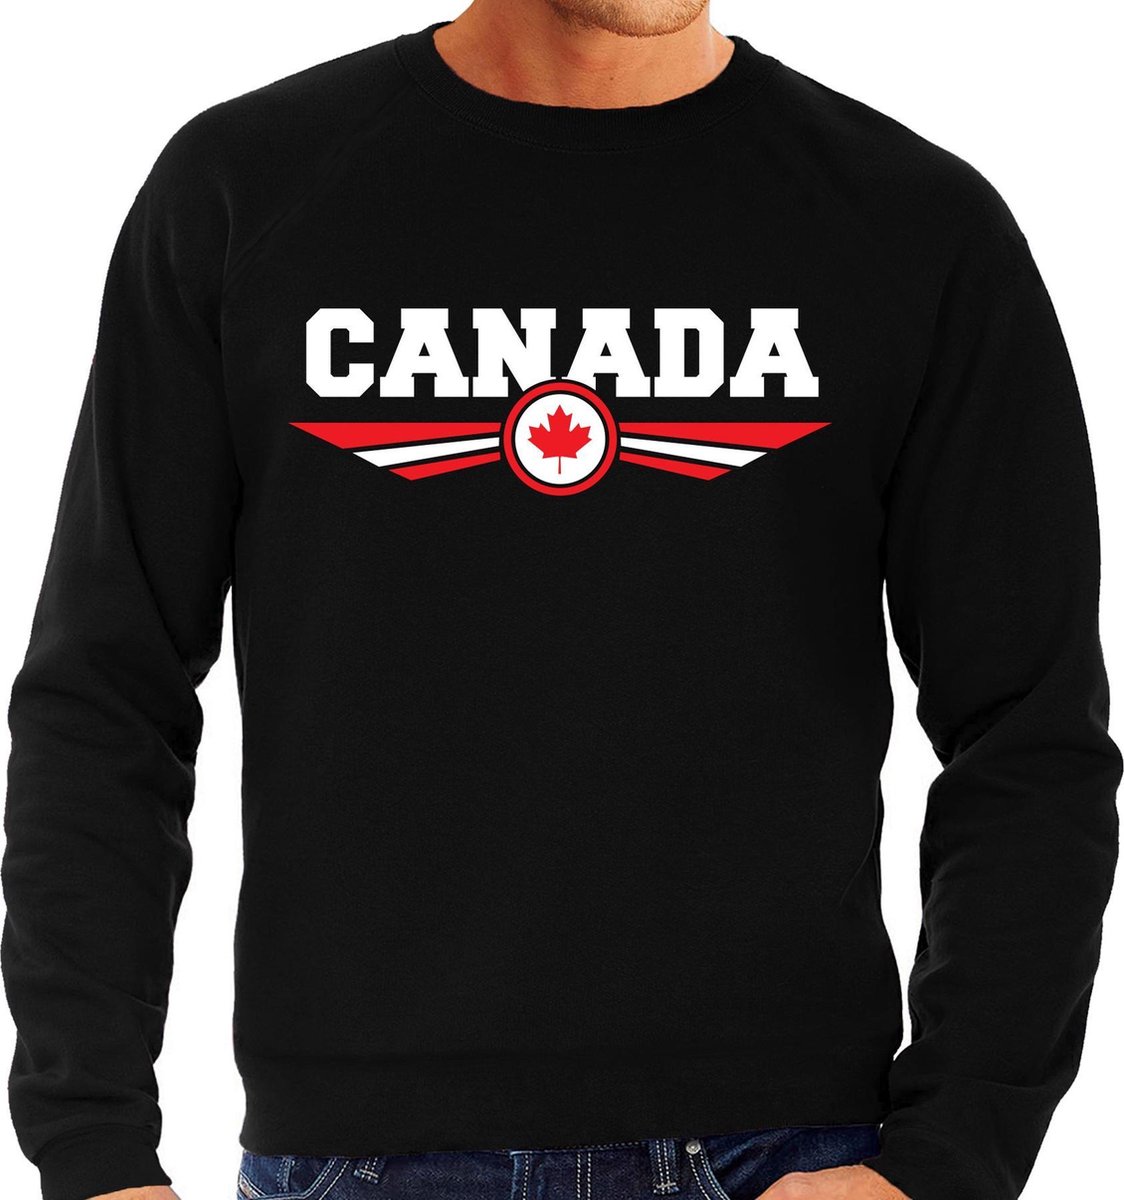 Canada landen sweater / trui zwart heren L